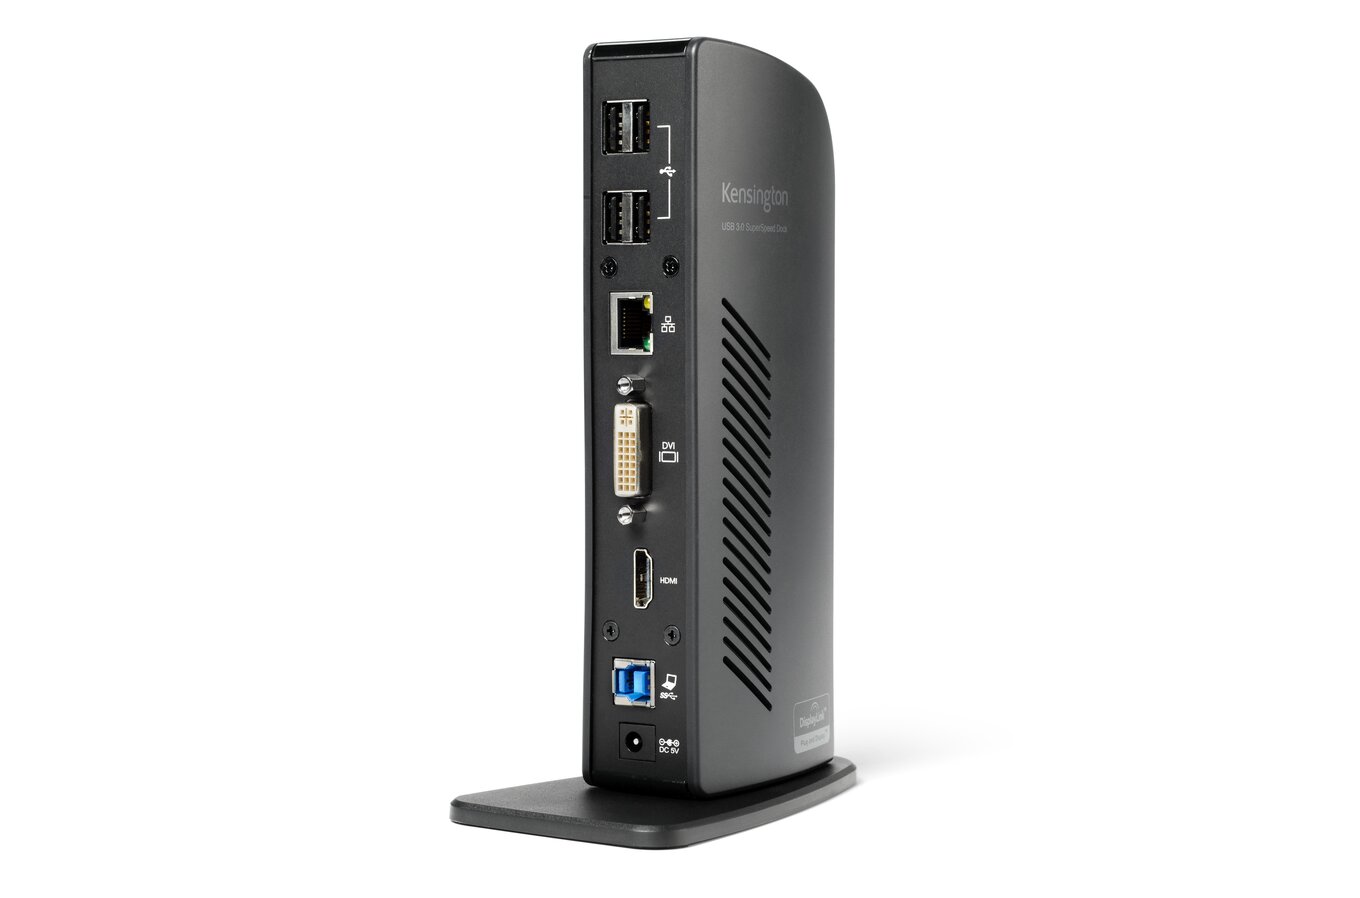 SD3500v 5Gbps USB 3.0 2K Docking Station - HDMI/DVI-I/VGA Windows | Universal Docking Stations | Kensington